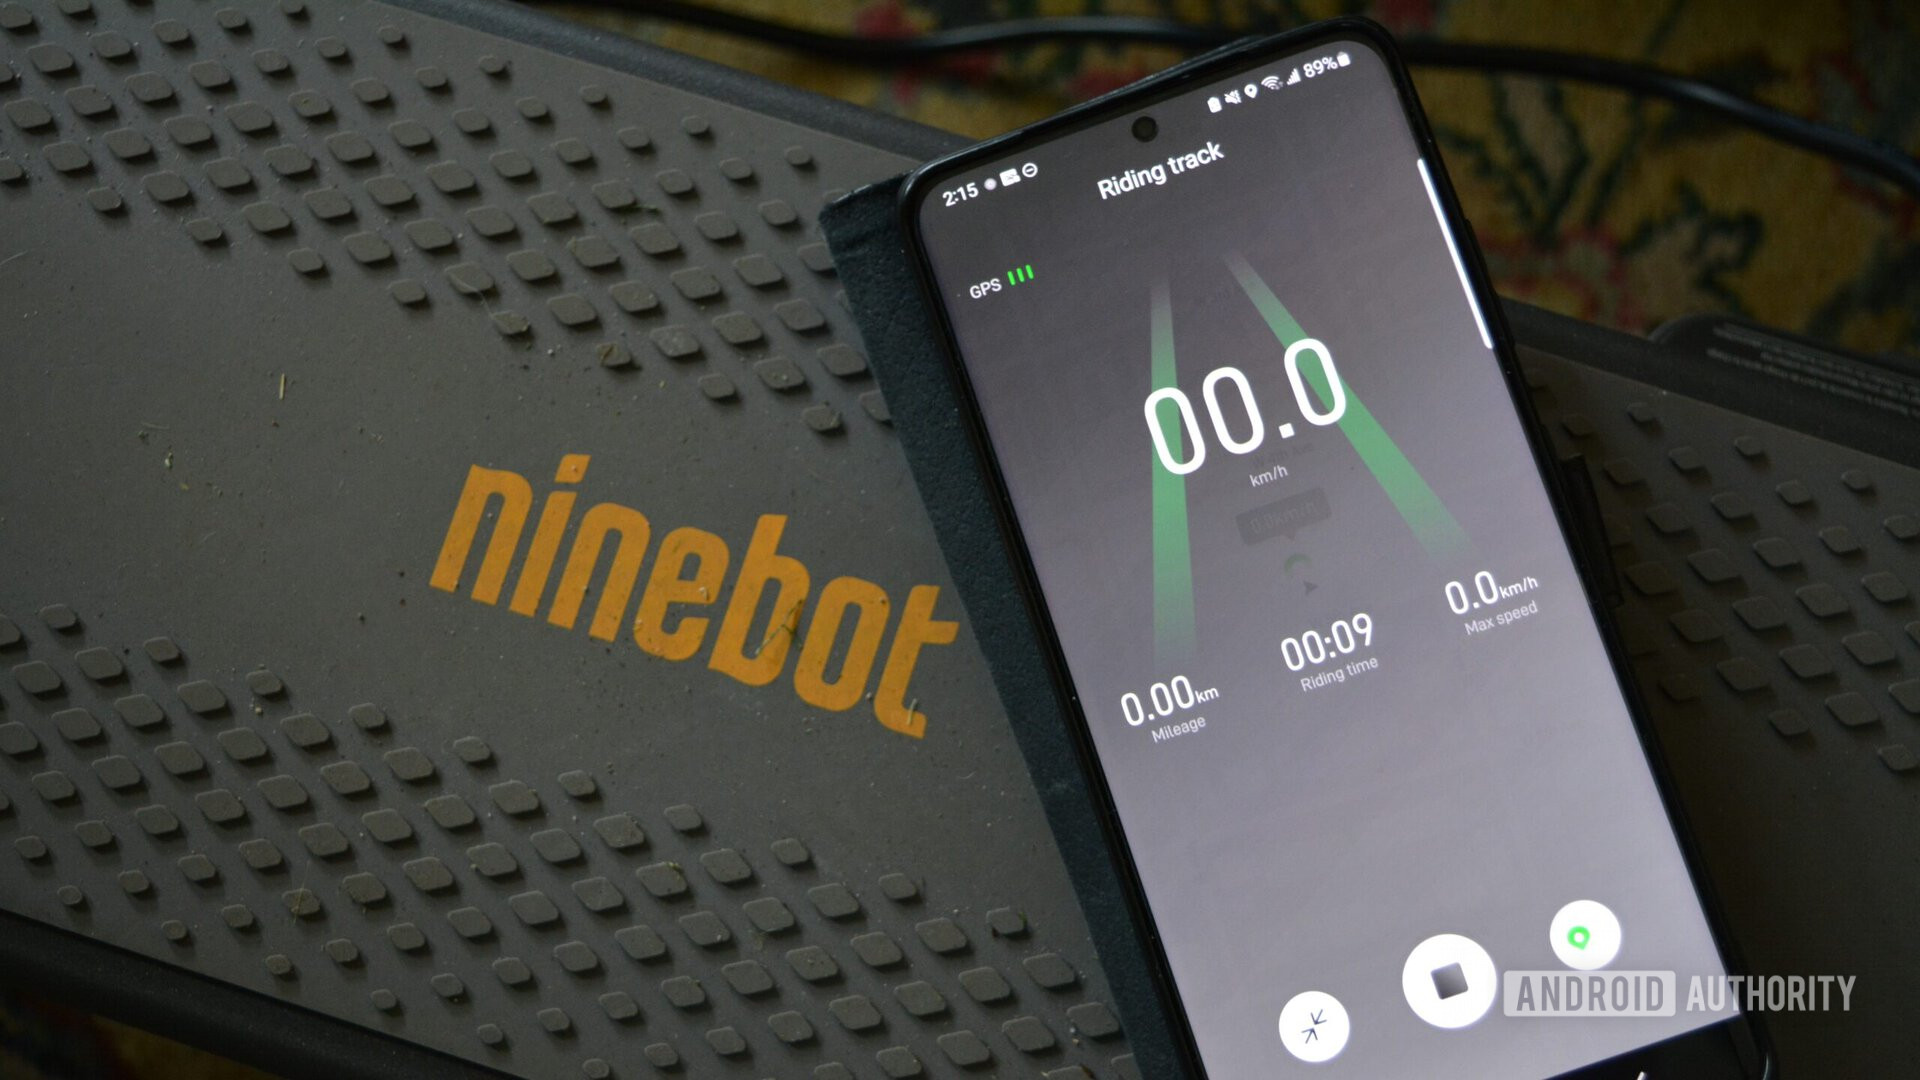 segway ninebot max phone app on baseboard